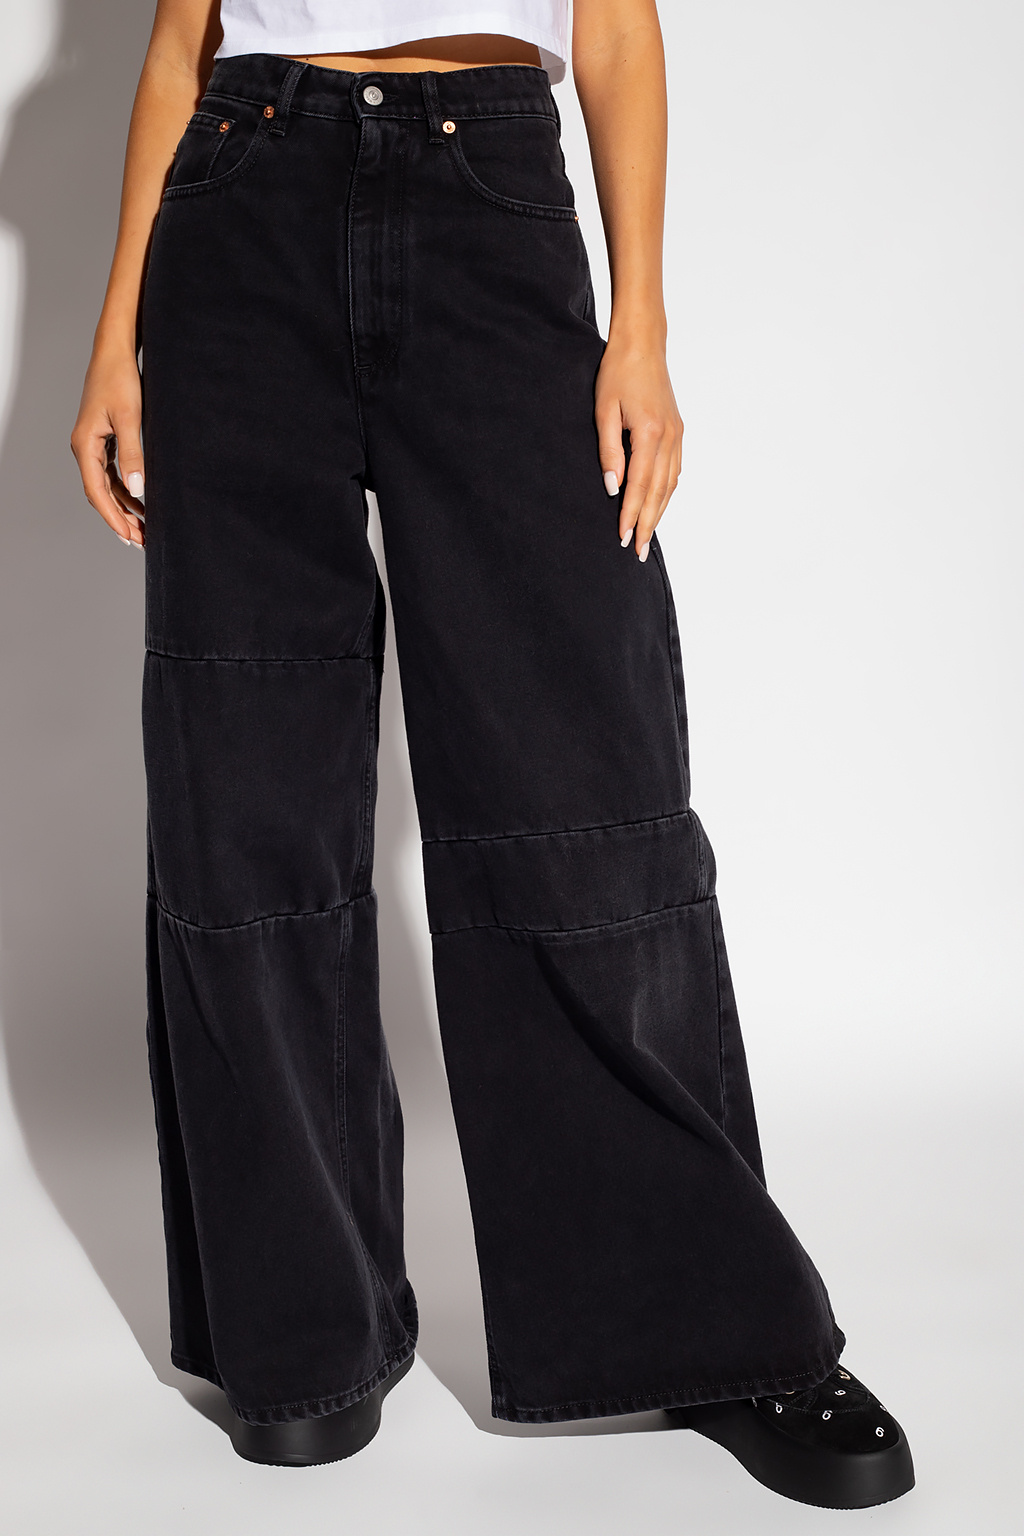 black pants skinny jeans Wide-legged jeans